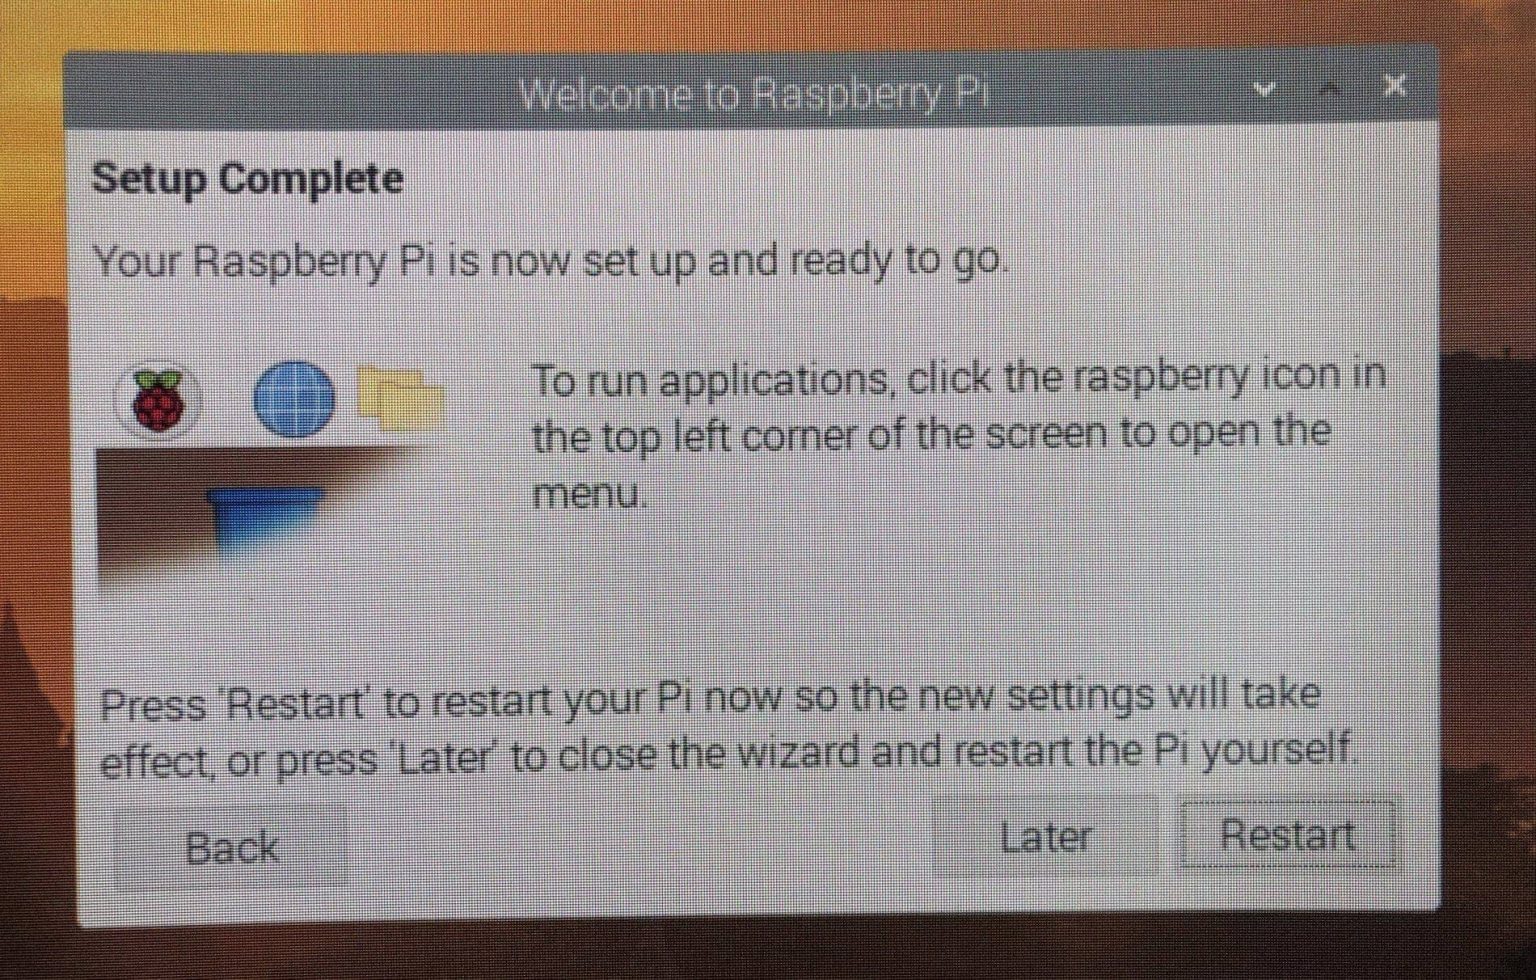 Raspberry-Pi-Setup-Complete-1536×980